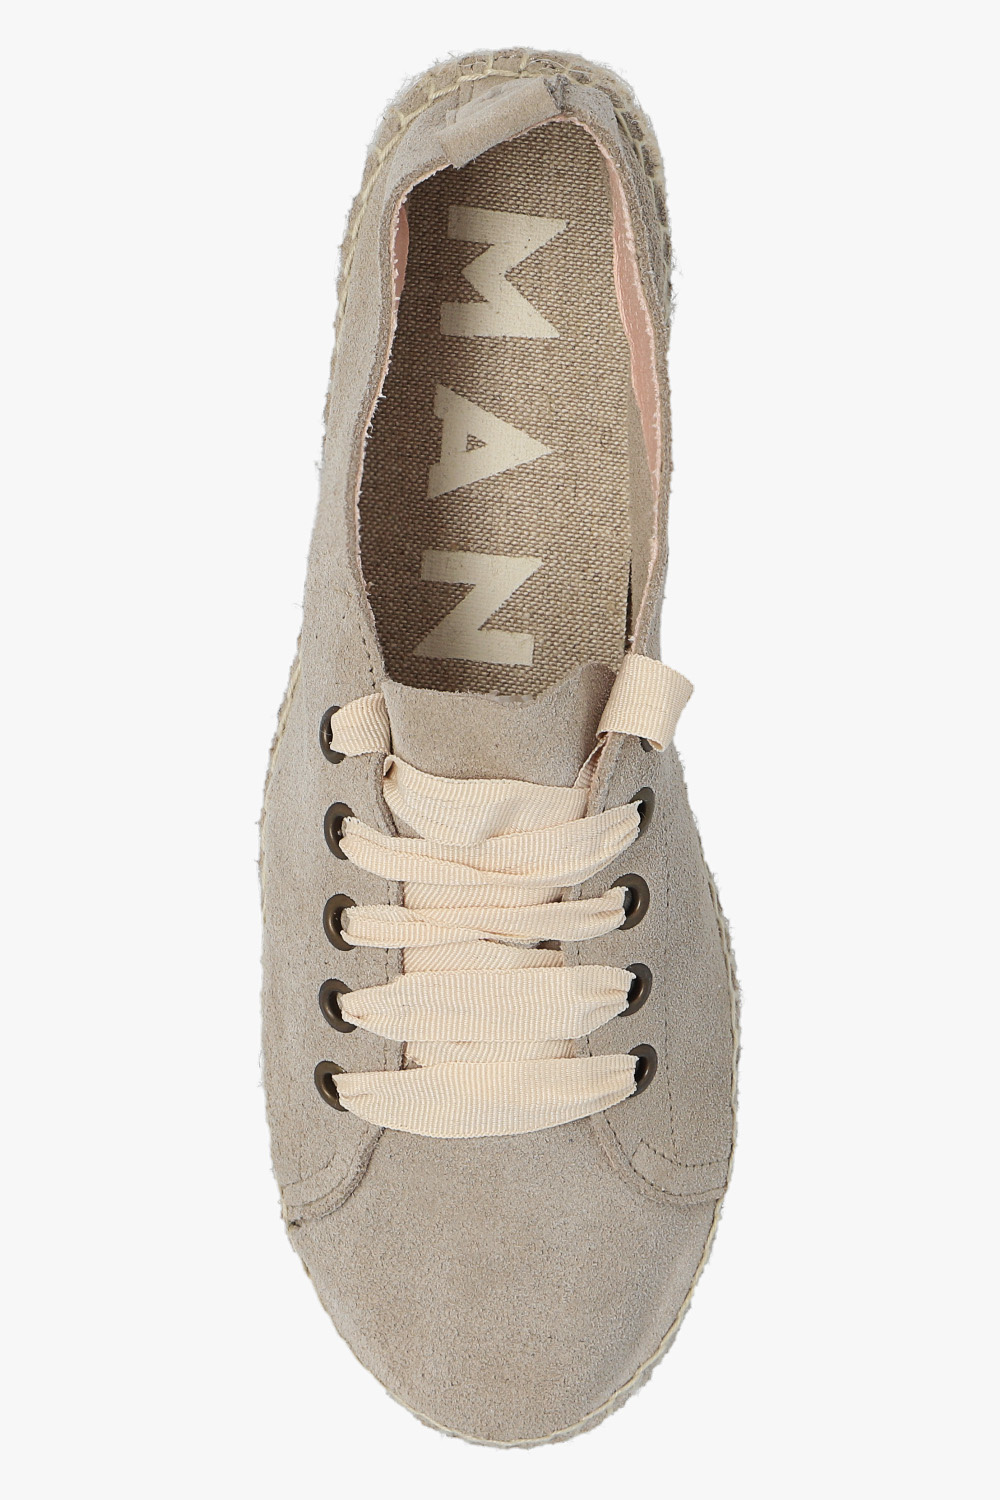 Manebí ‘Hamptons’ shoes